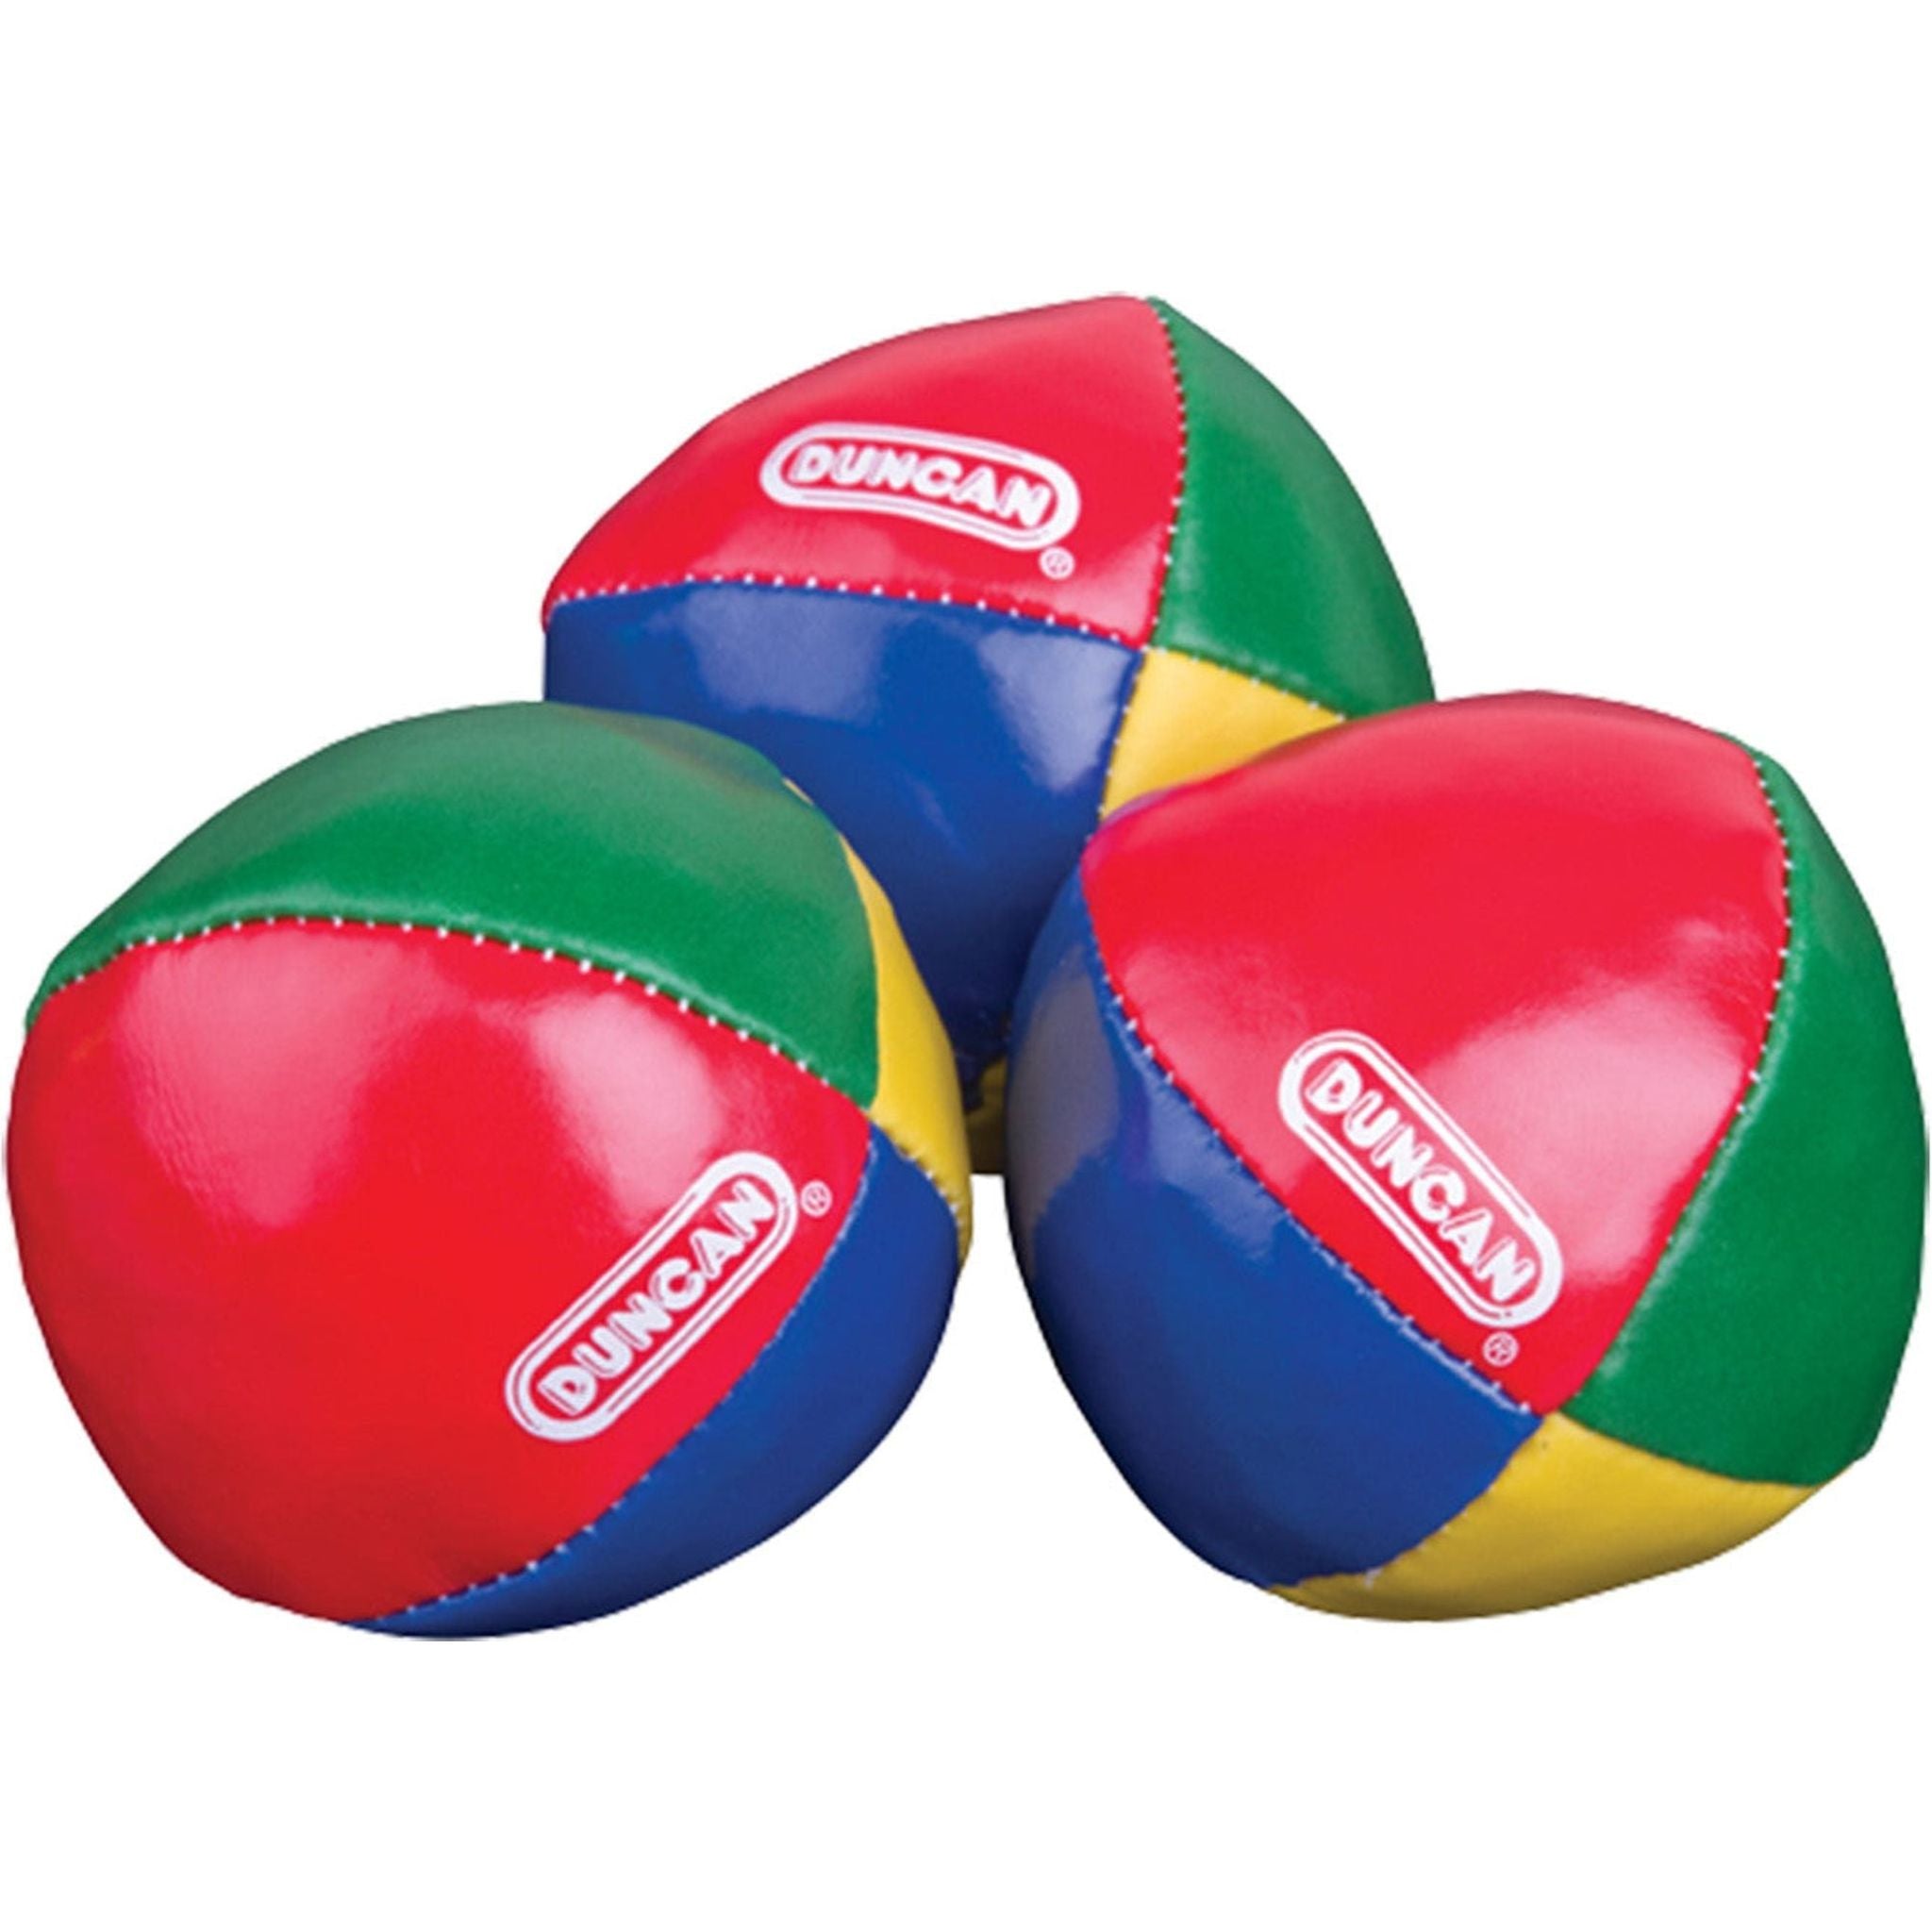 Duncan Juggling Balls - Toybox Tales